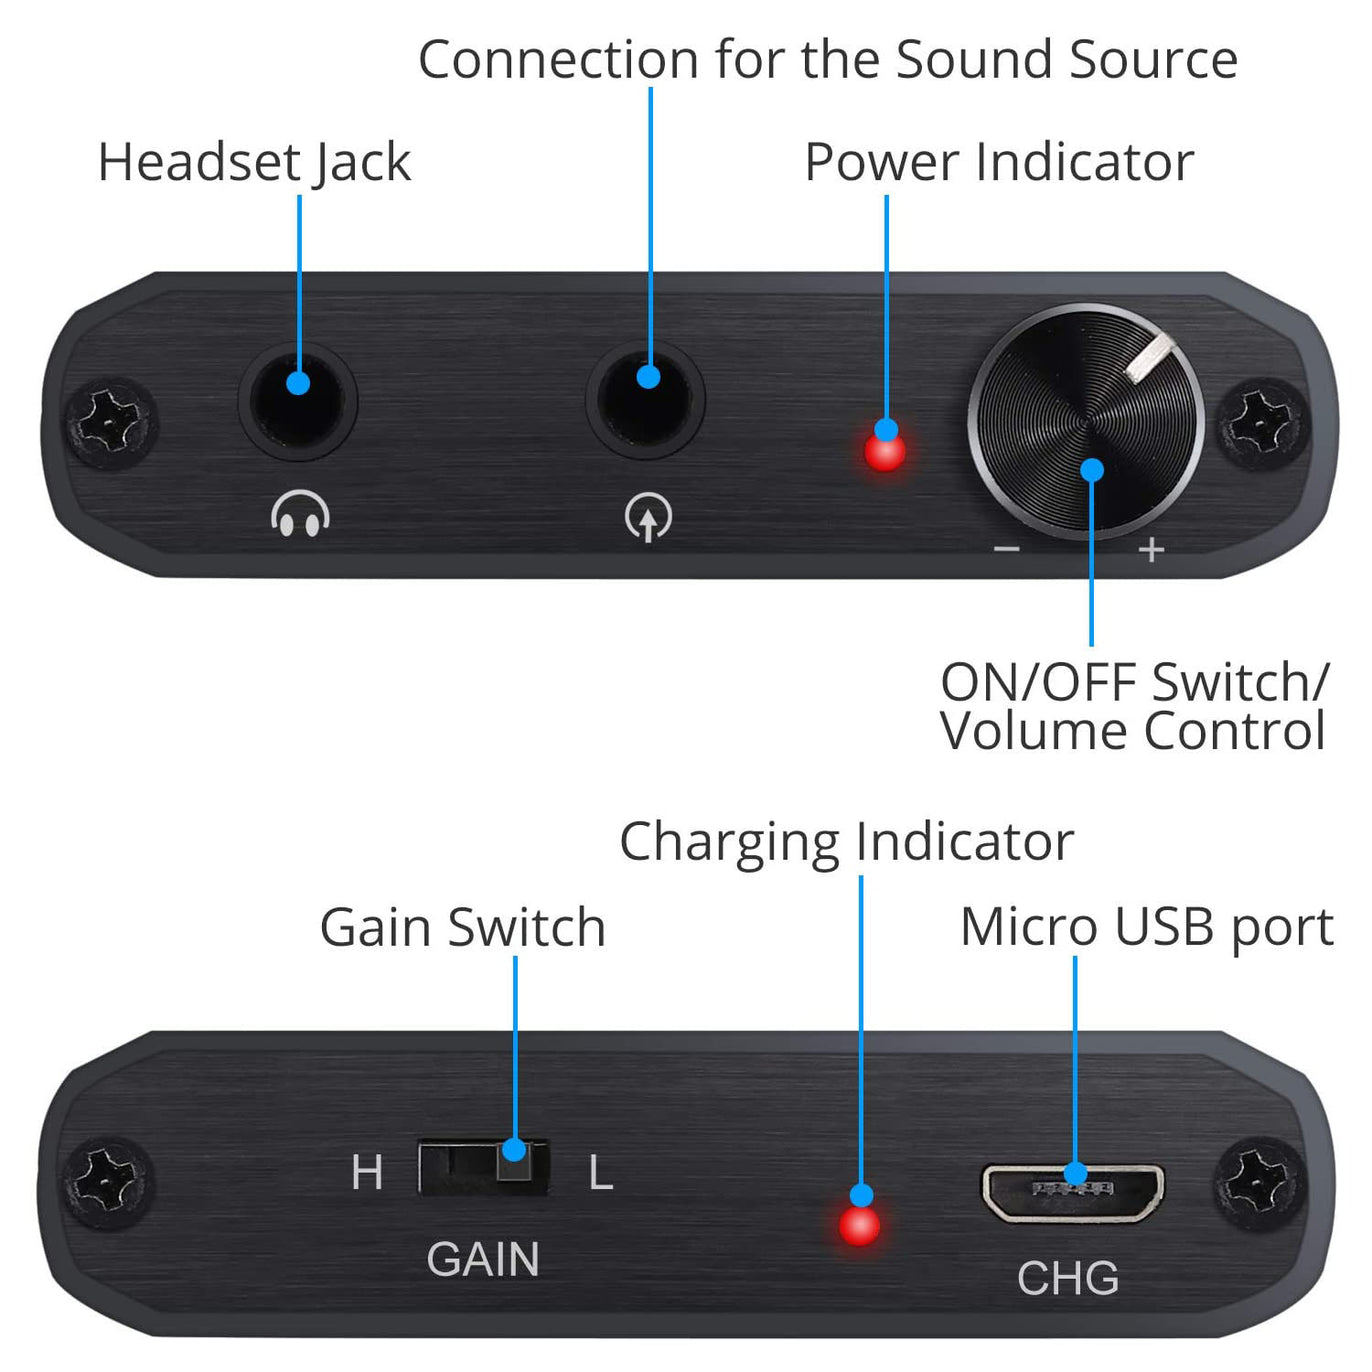 eSynic HiFi Headphone Amplifier Portable